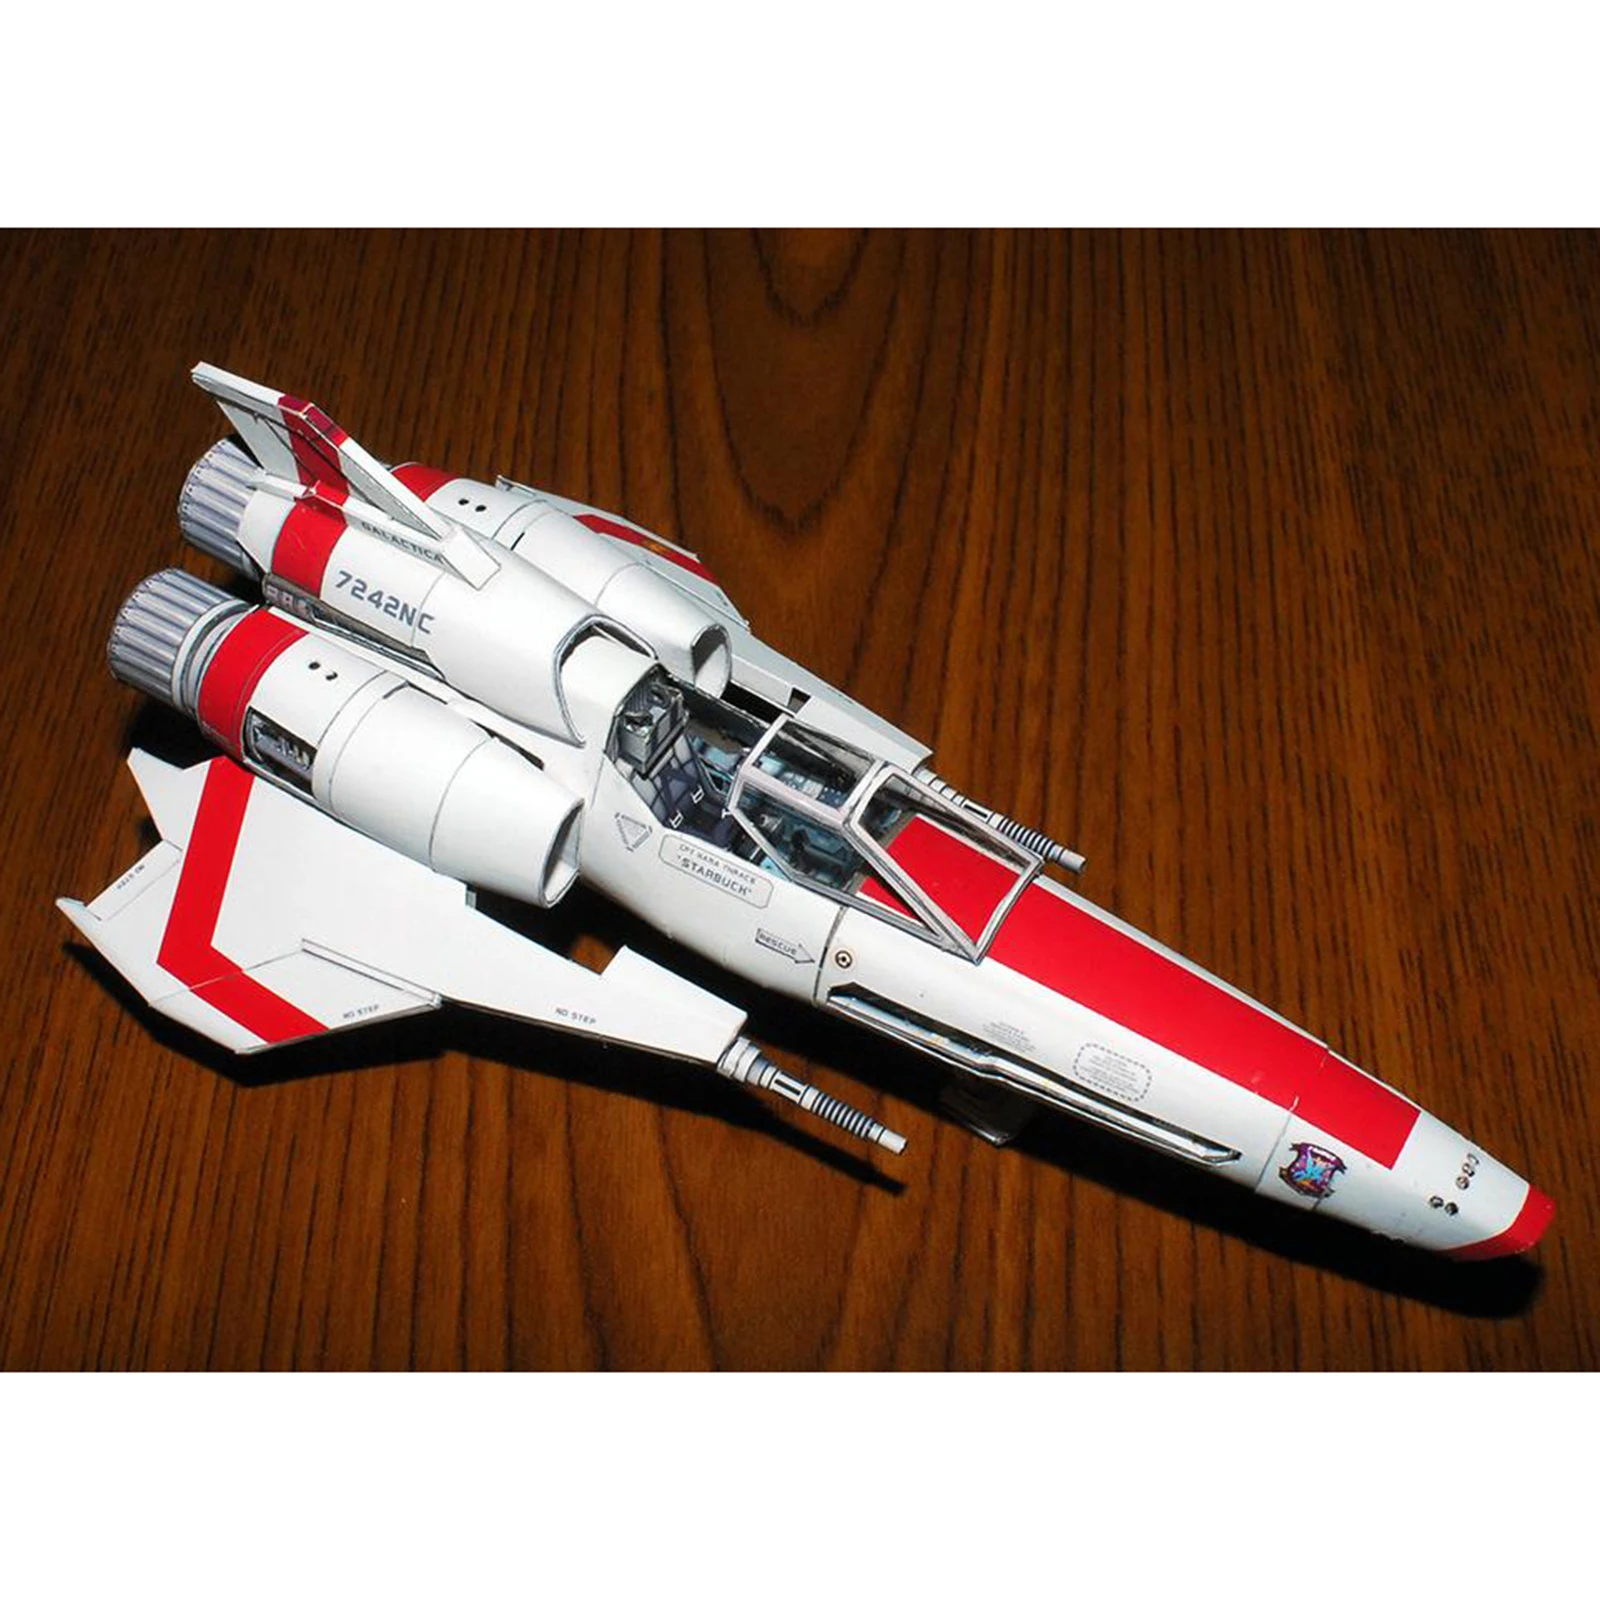 Battlestar Galactica  Mk II Ship 3D Paper Model Kit Spaceship DIY Spacecraft Crafts, 15x9cm, not suitable for novices.